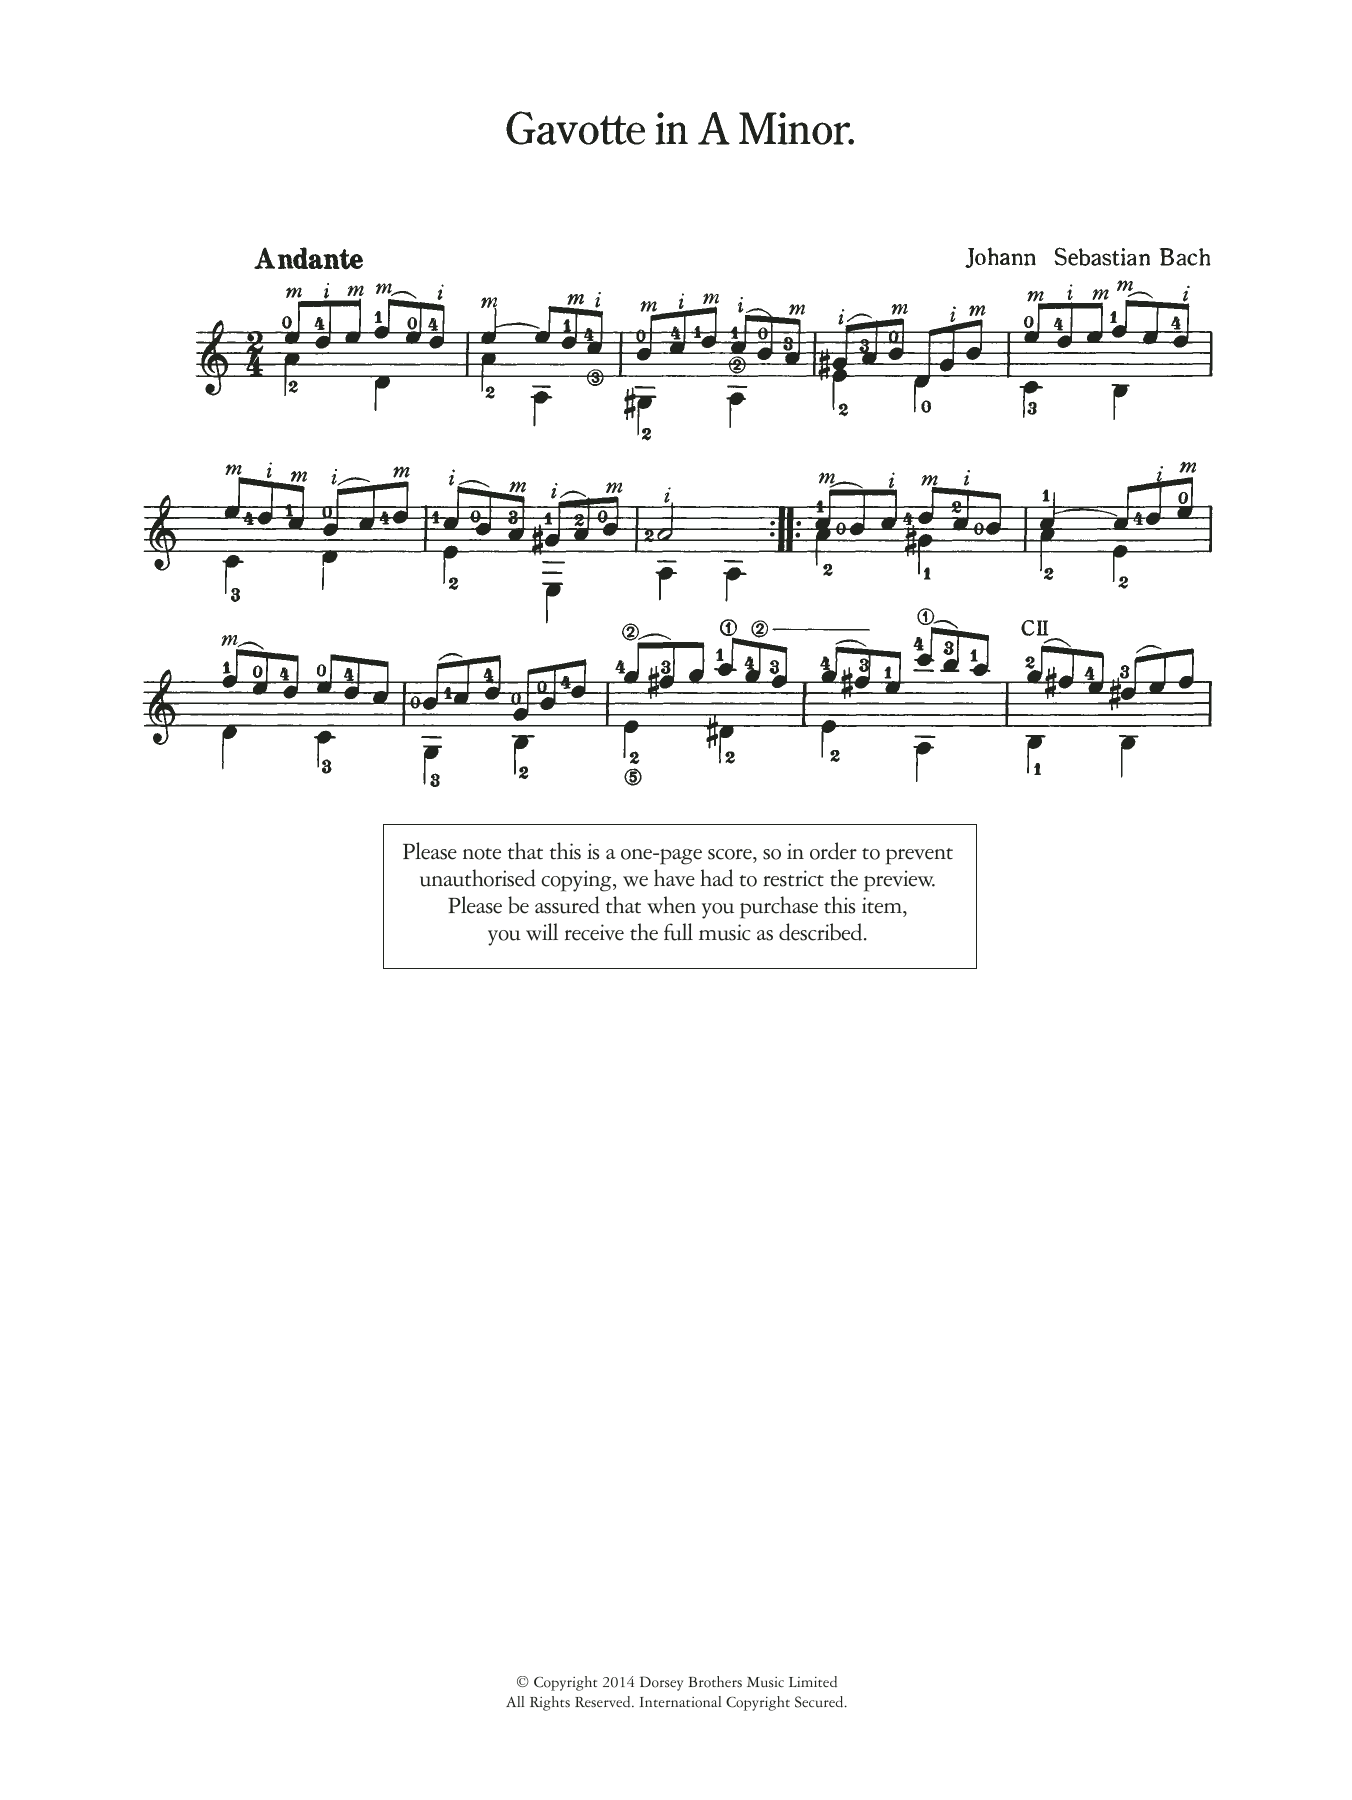 Johann Sebastian Bach Gavotte in A Minor sheet music notes and chords arranged for Solo Guitar